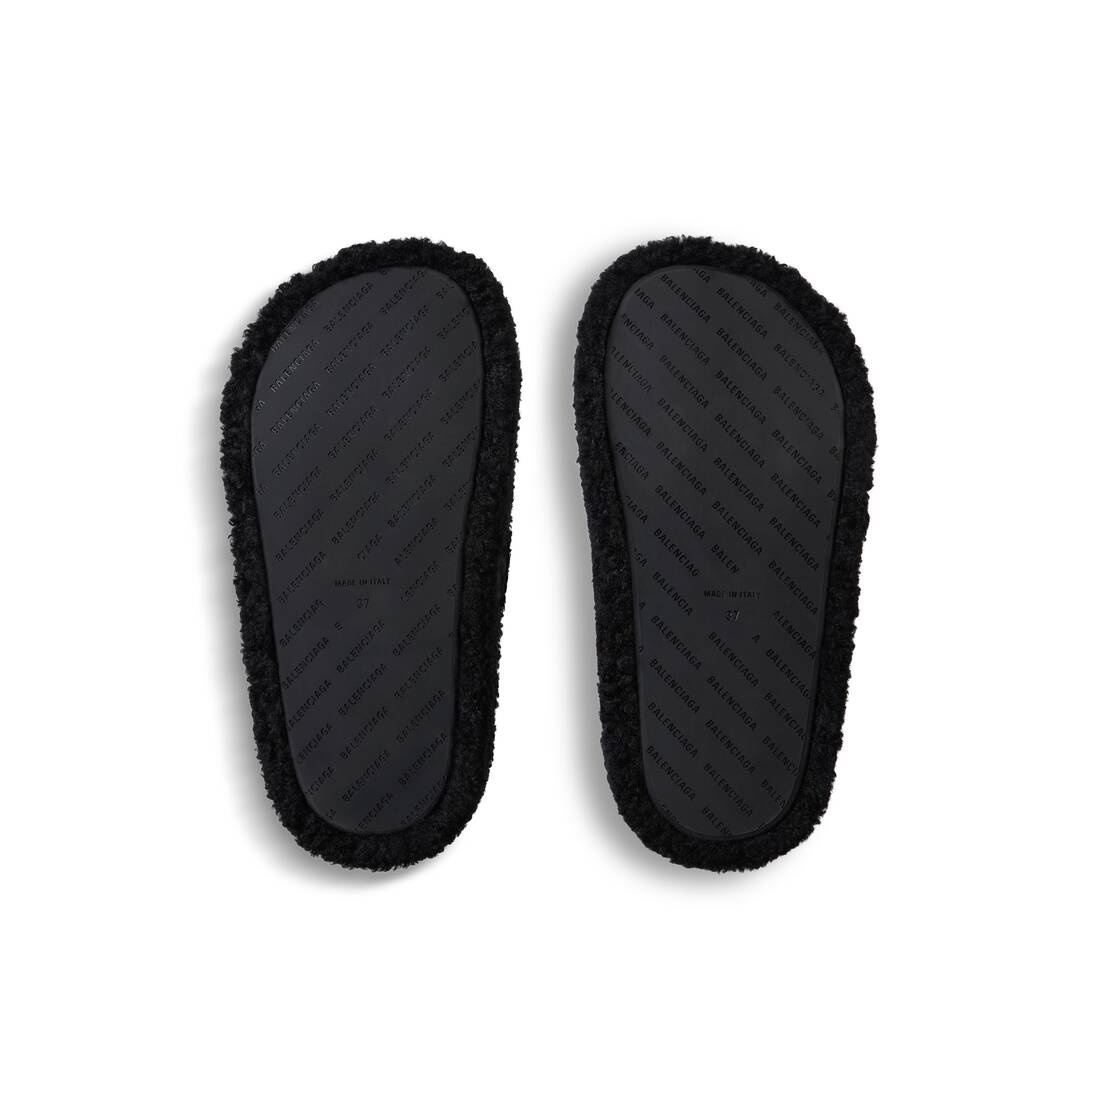 Women's Furry Platform Sandal in Black - 7